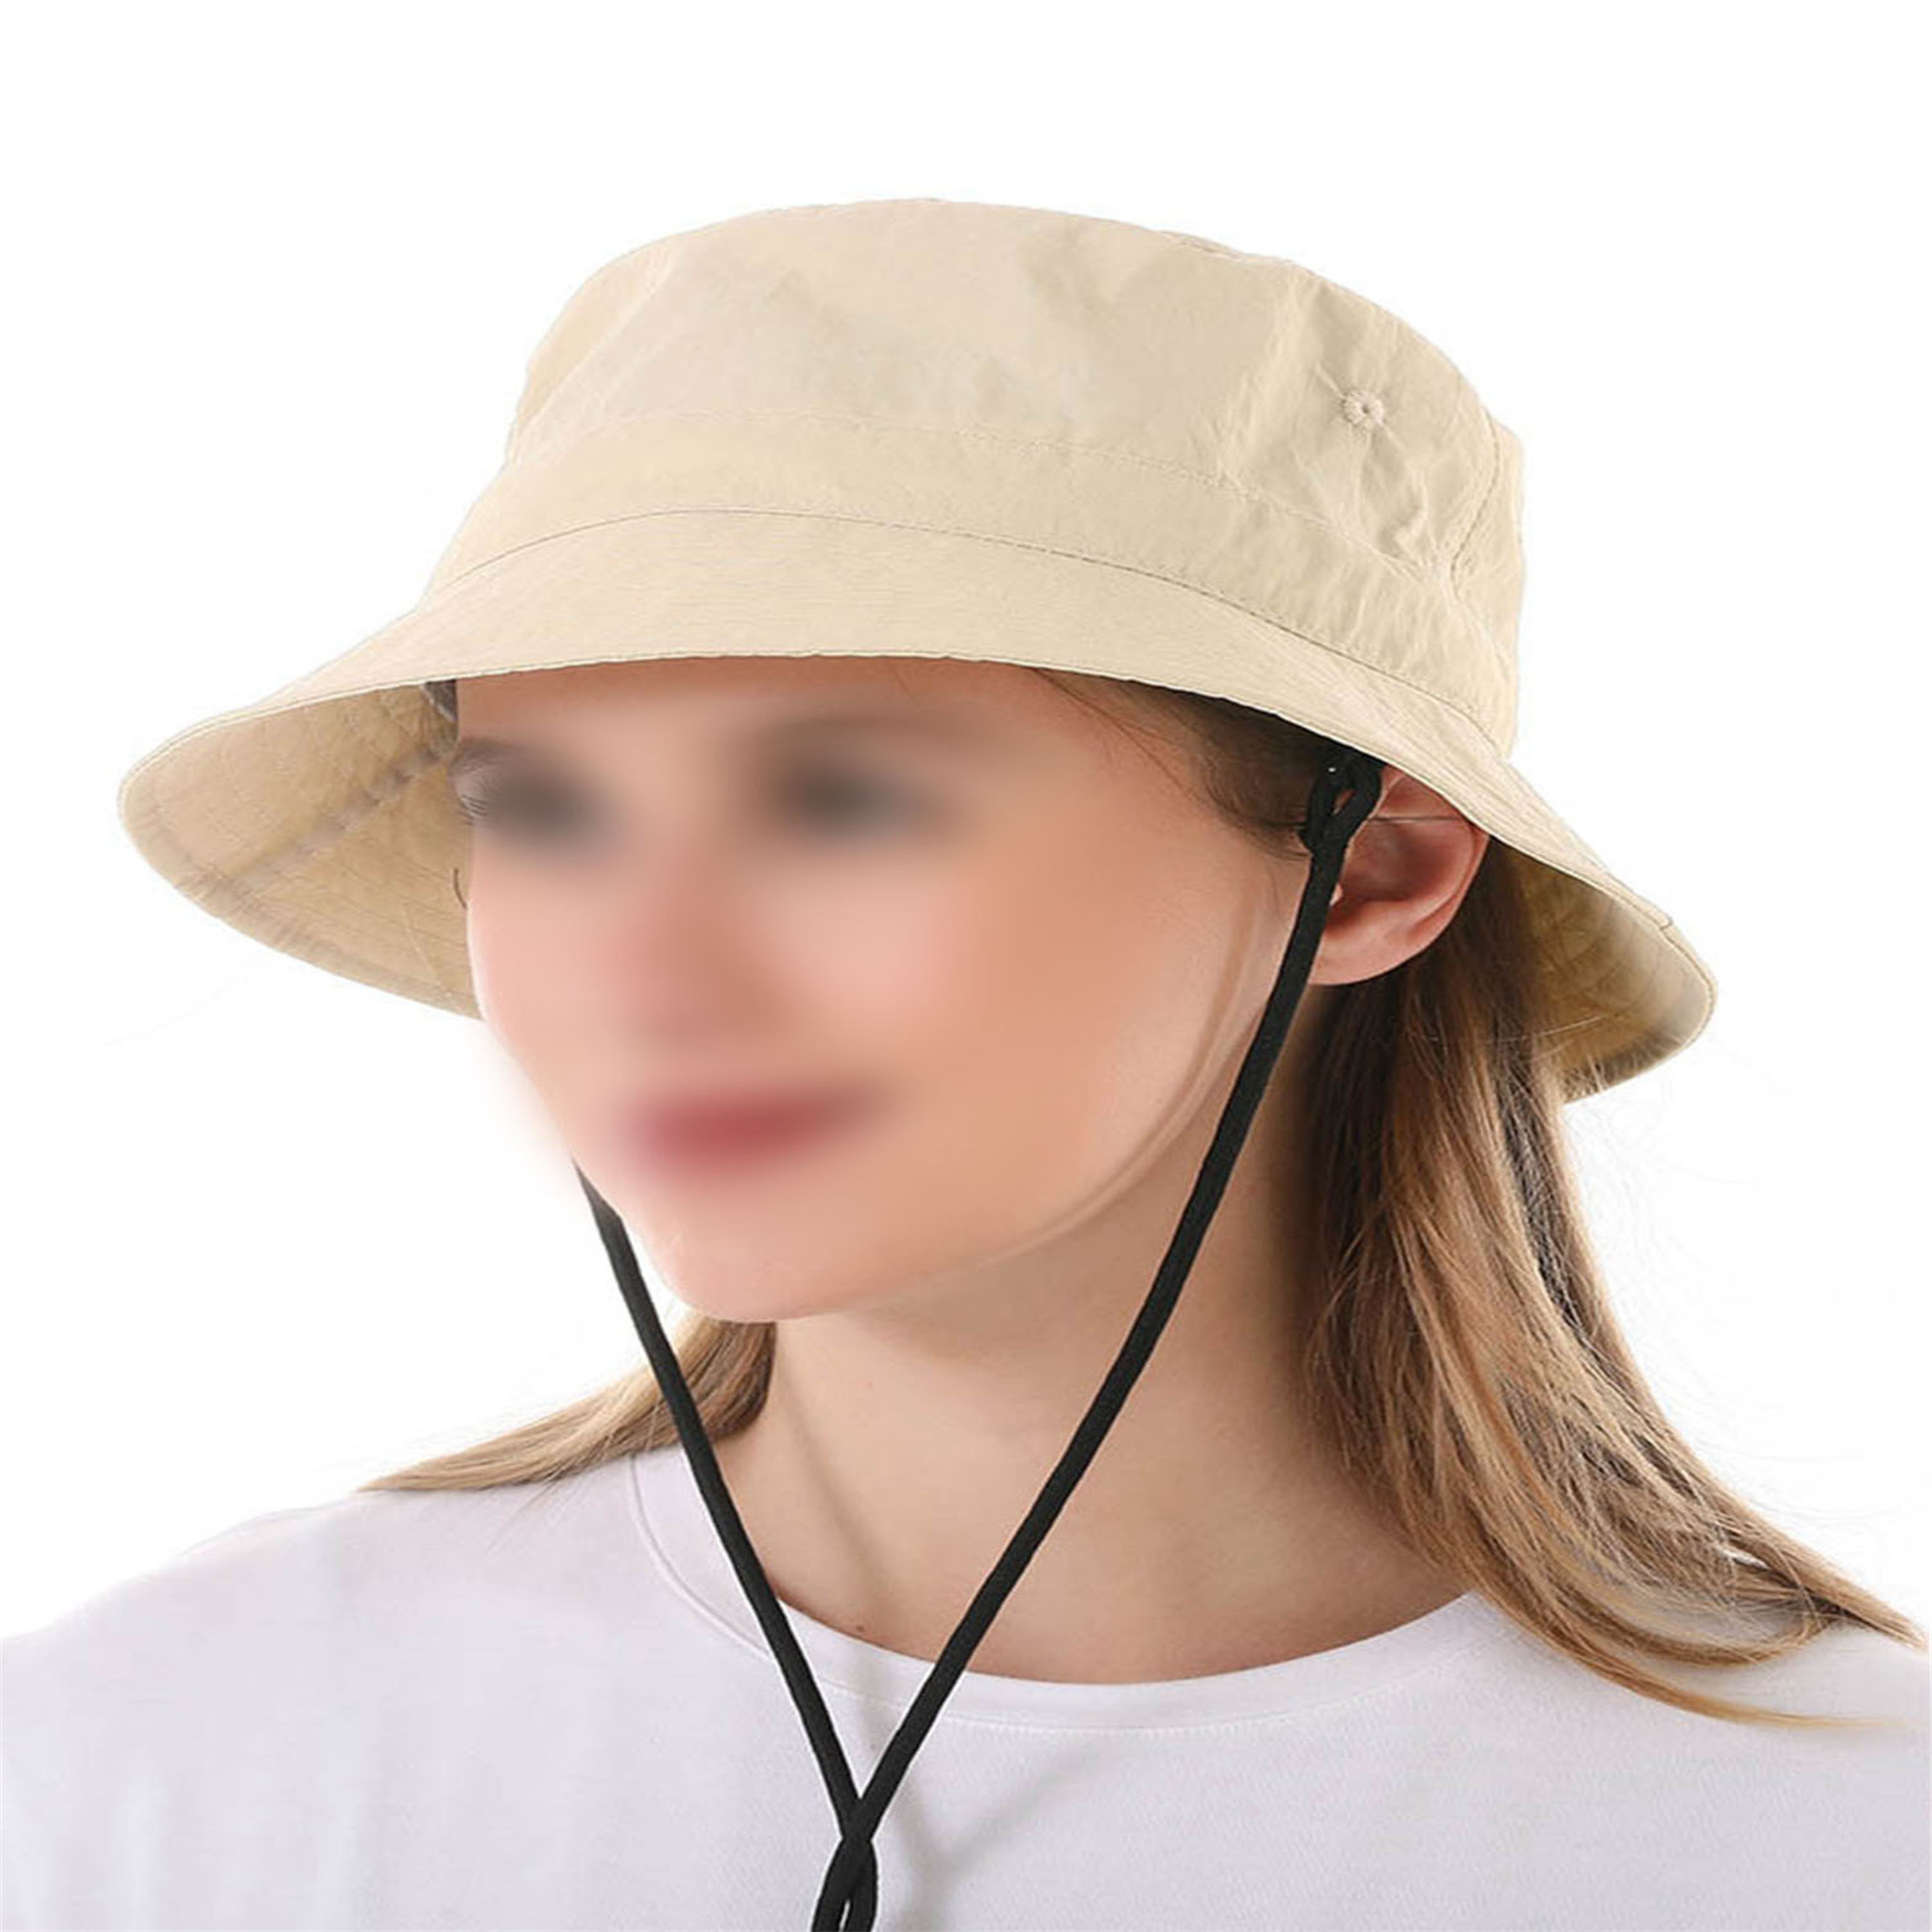 Binwwede Bucket Sun Hat Fishing Hat Summer Travel Beach Sun Hat UPF 50 UV Protection Packable Summer Fisherman Cap MHXX - image 5 of 6